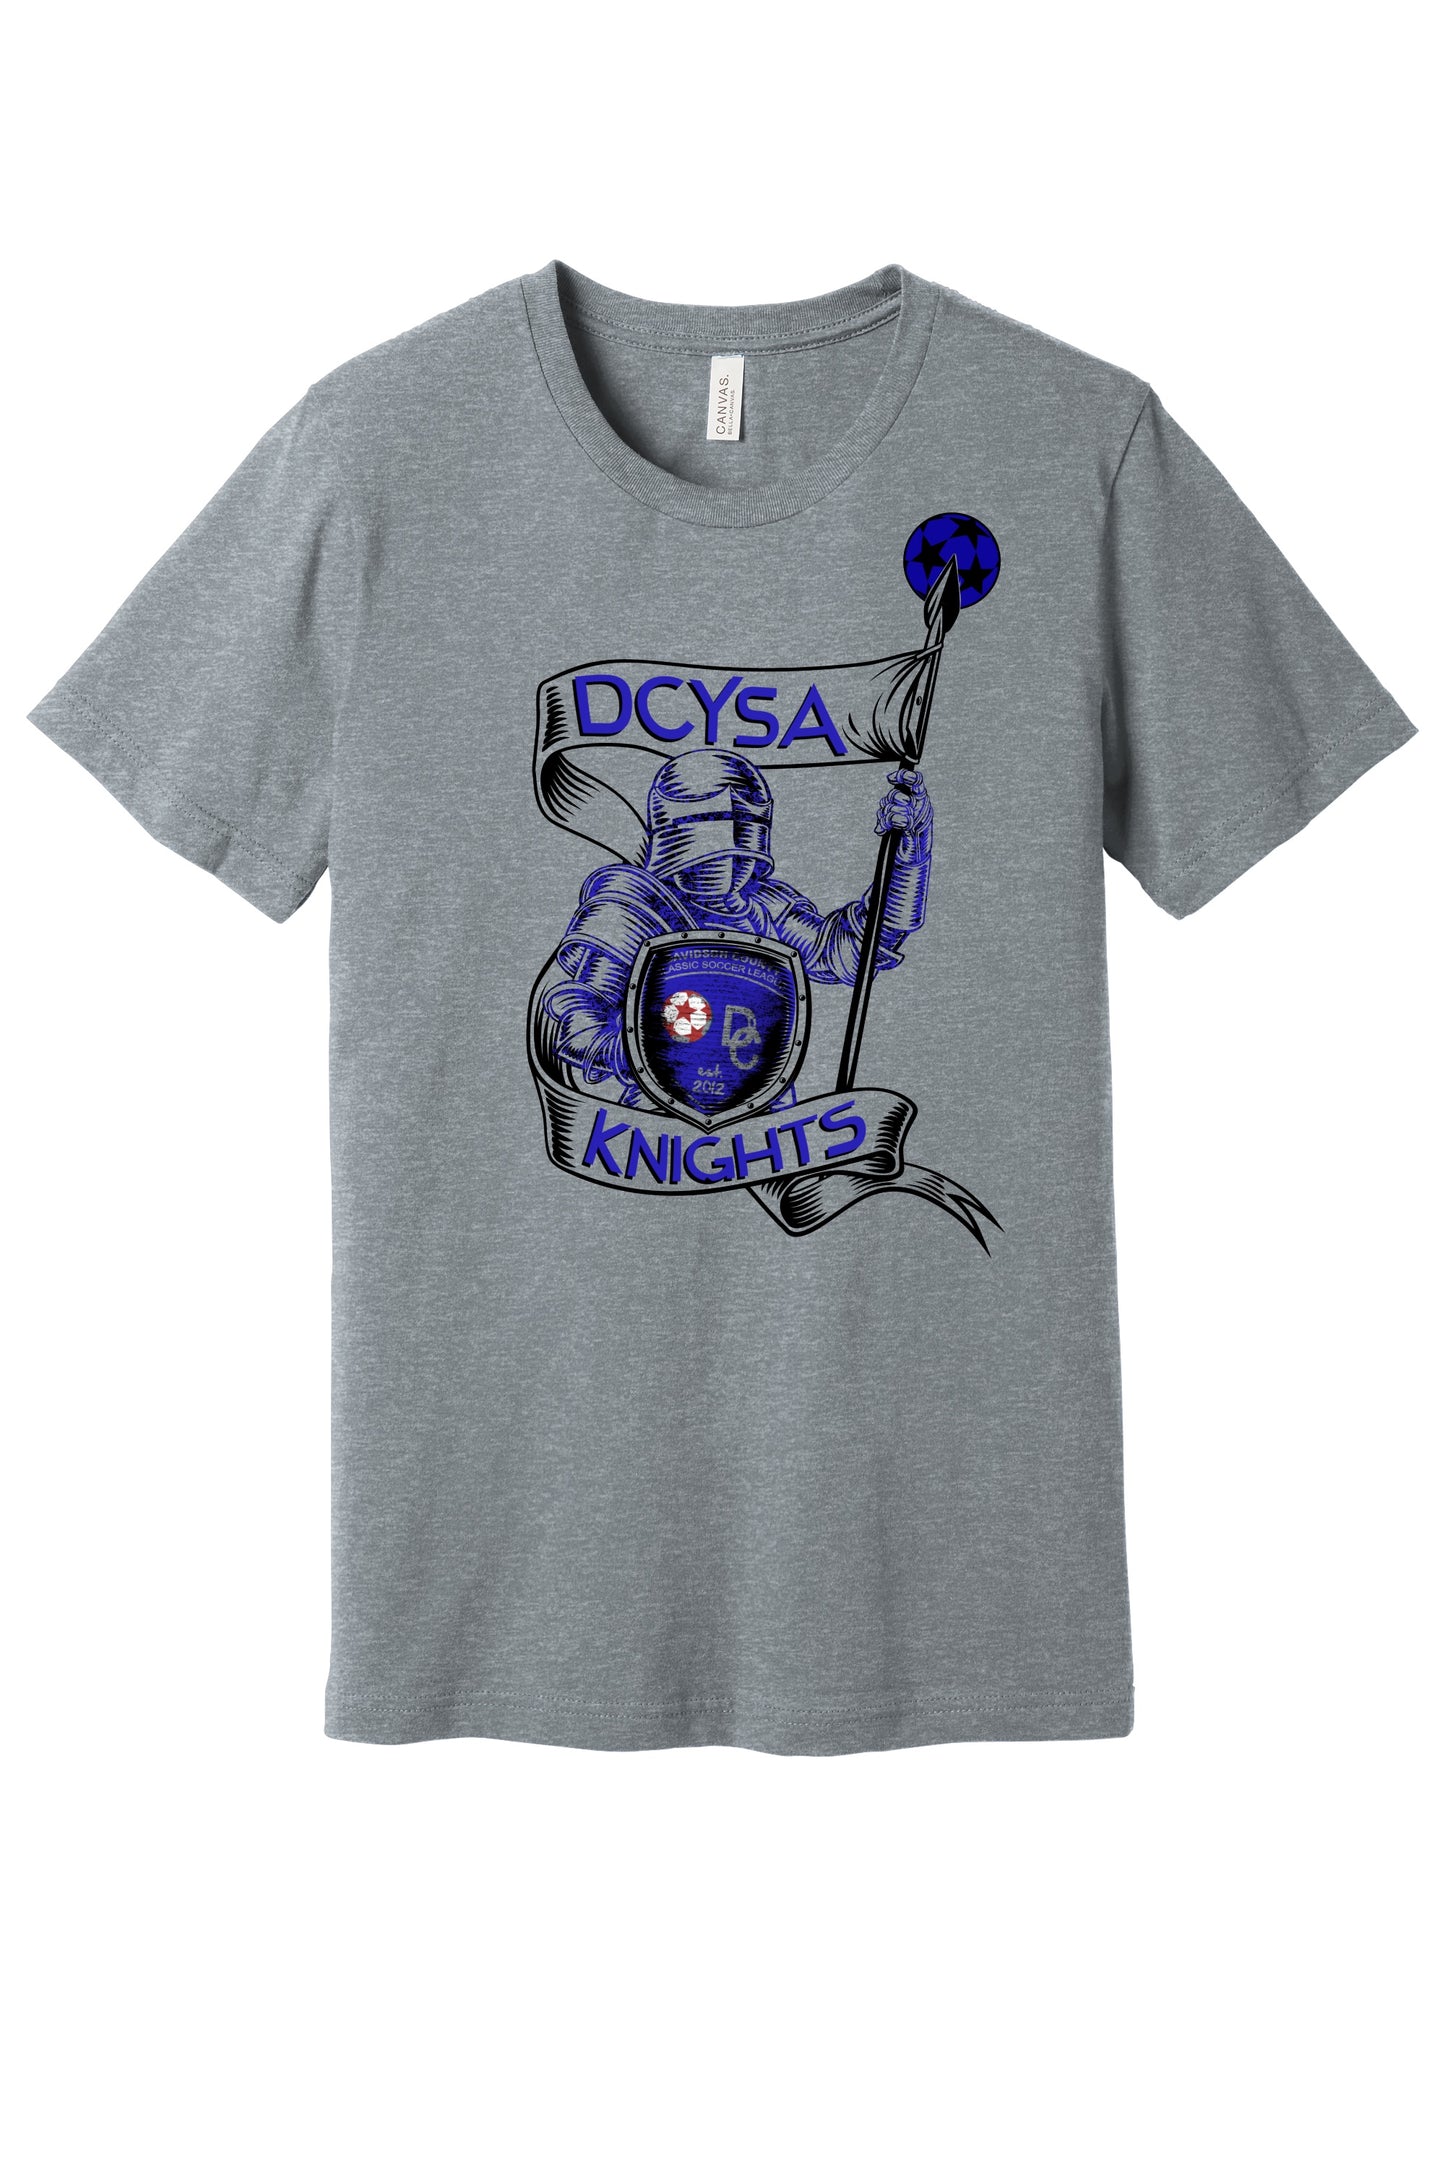 DCYSA Knights T-Shirt, Crewneck, & Hoodie